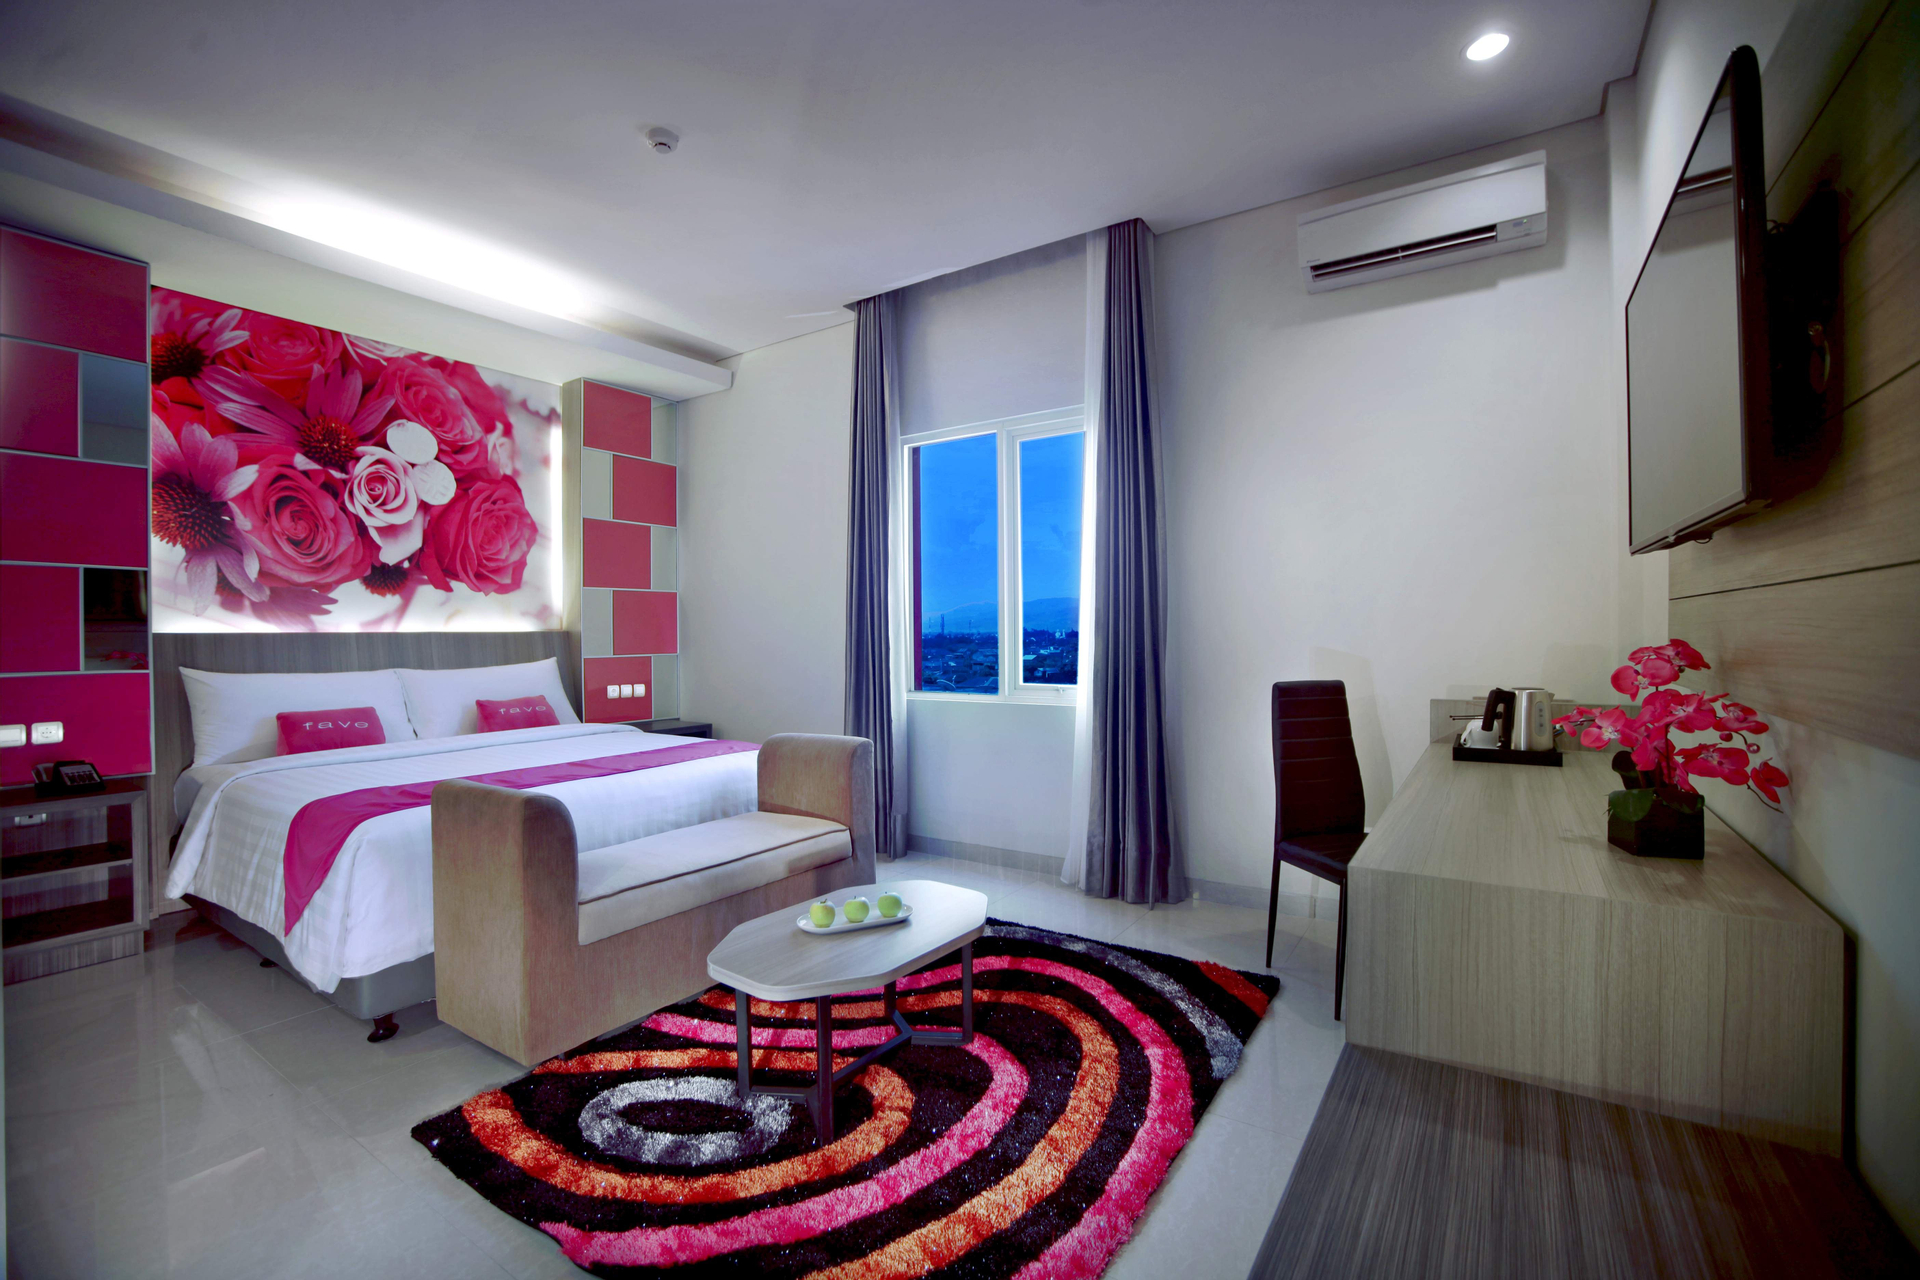 Bedroom 3, favehotel Langko Mataram - Lombok, Lombok